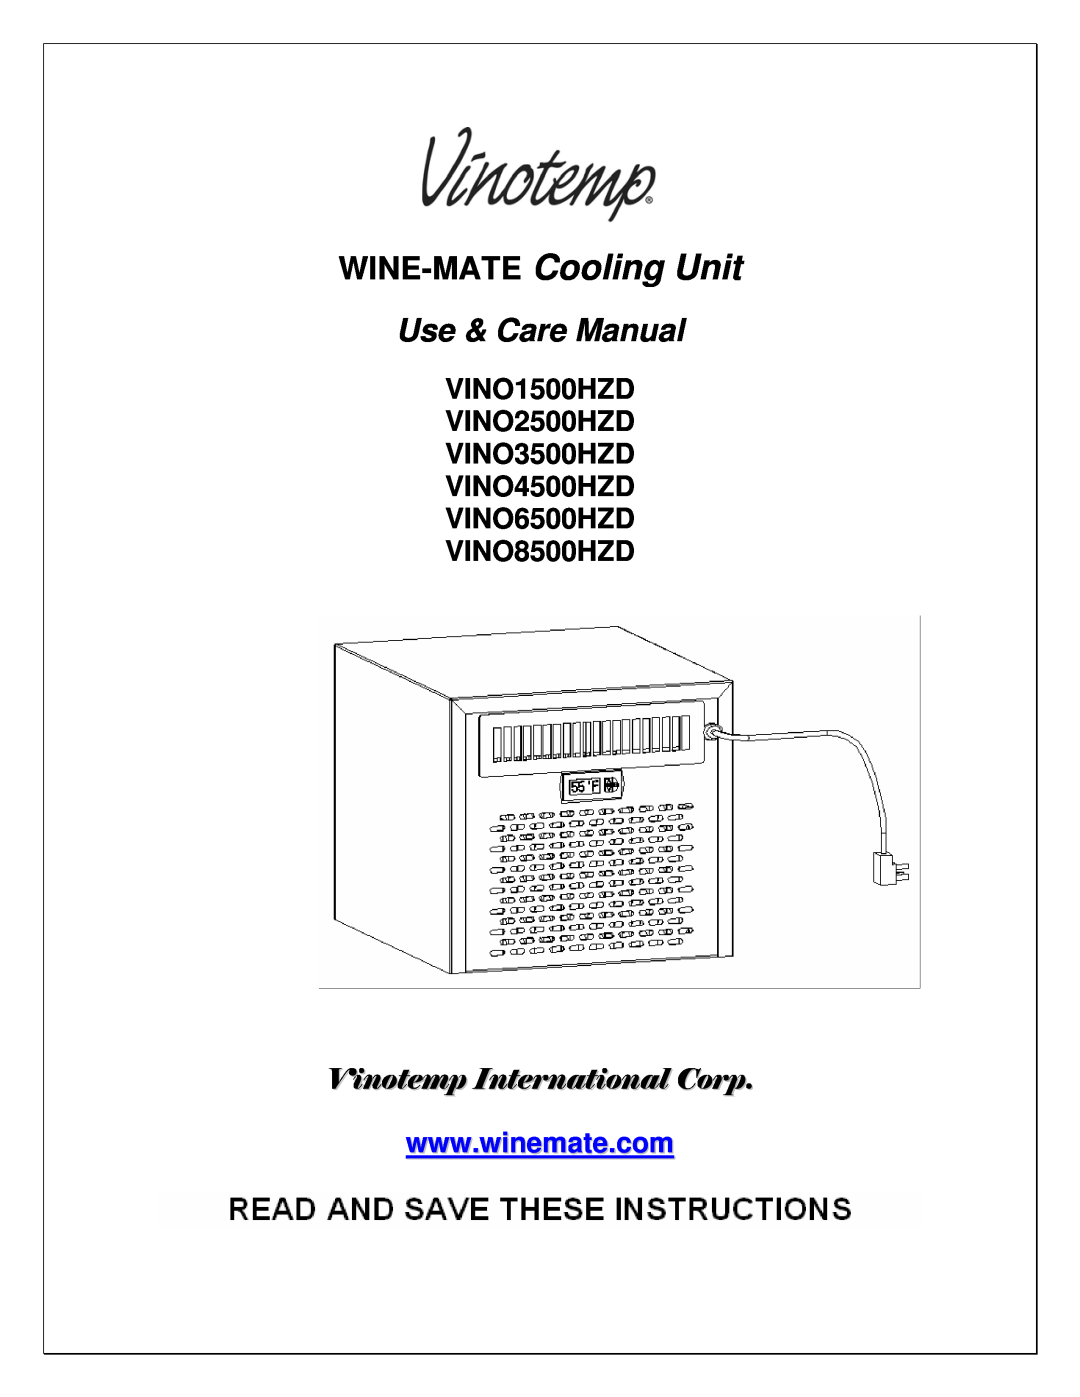 Vinotemp WM-1500-HTD manual VINO1500HZD VINO2500HZD VINO3500HZD VINO4500HZD, VINO6500HZD VINO8500HZD, Use & Care Manual 